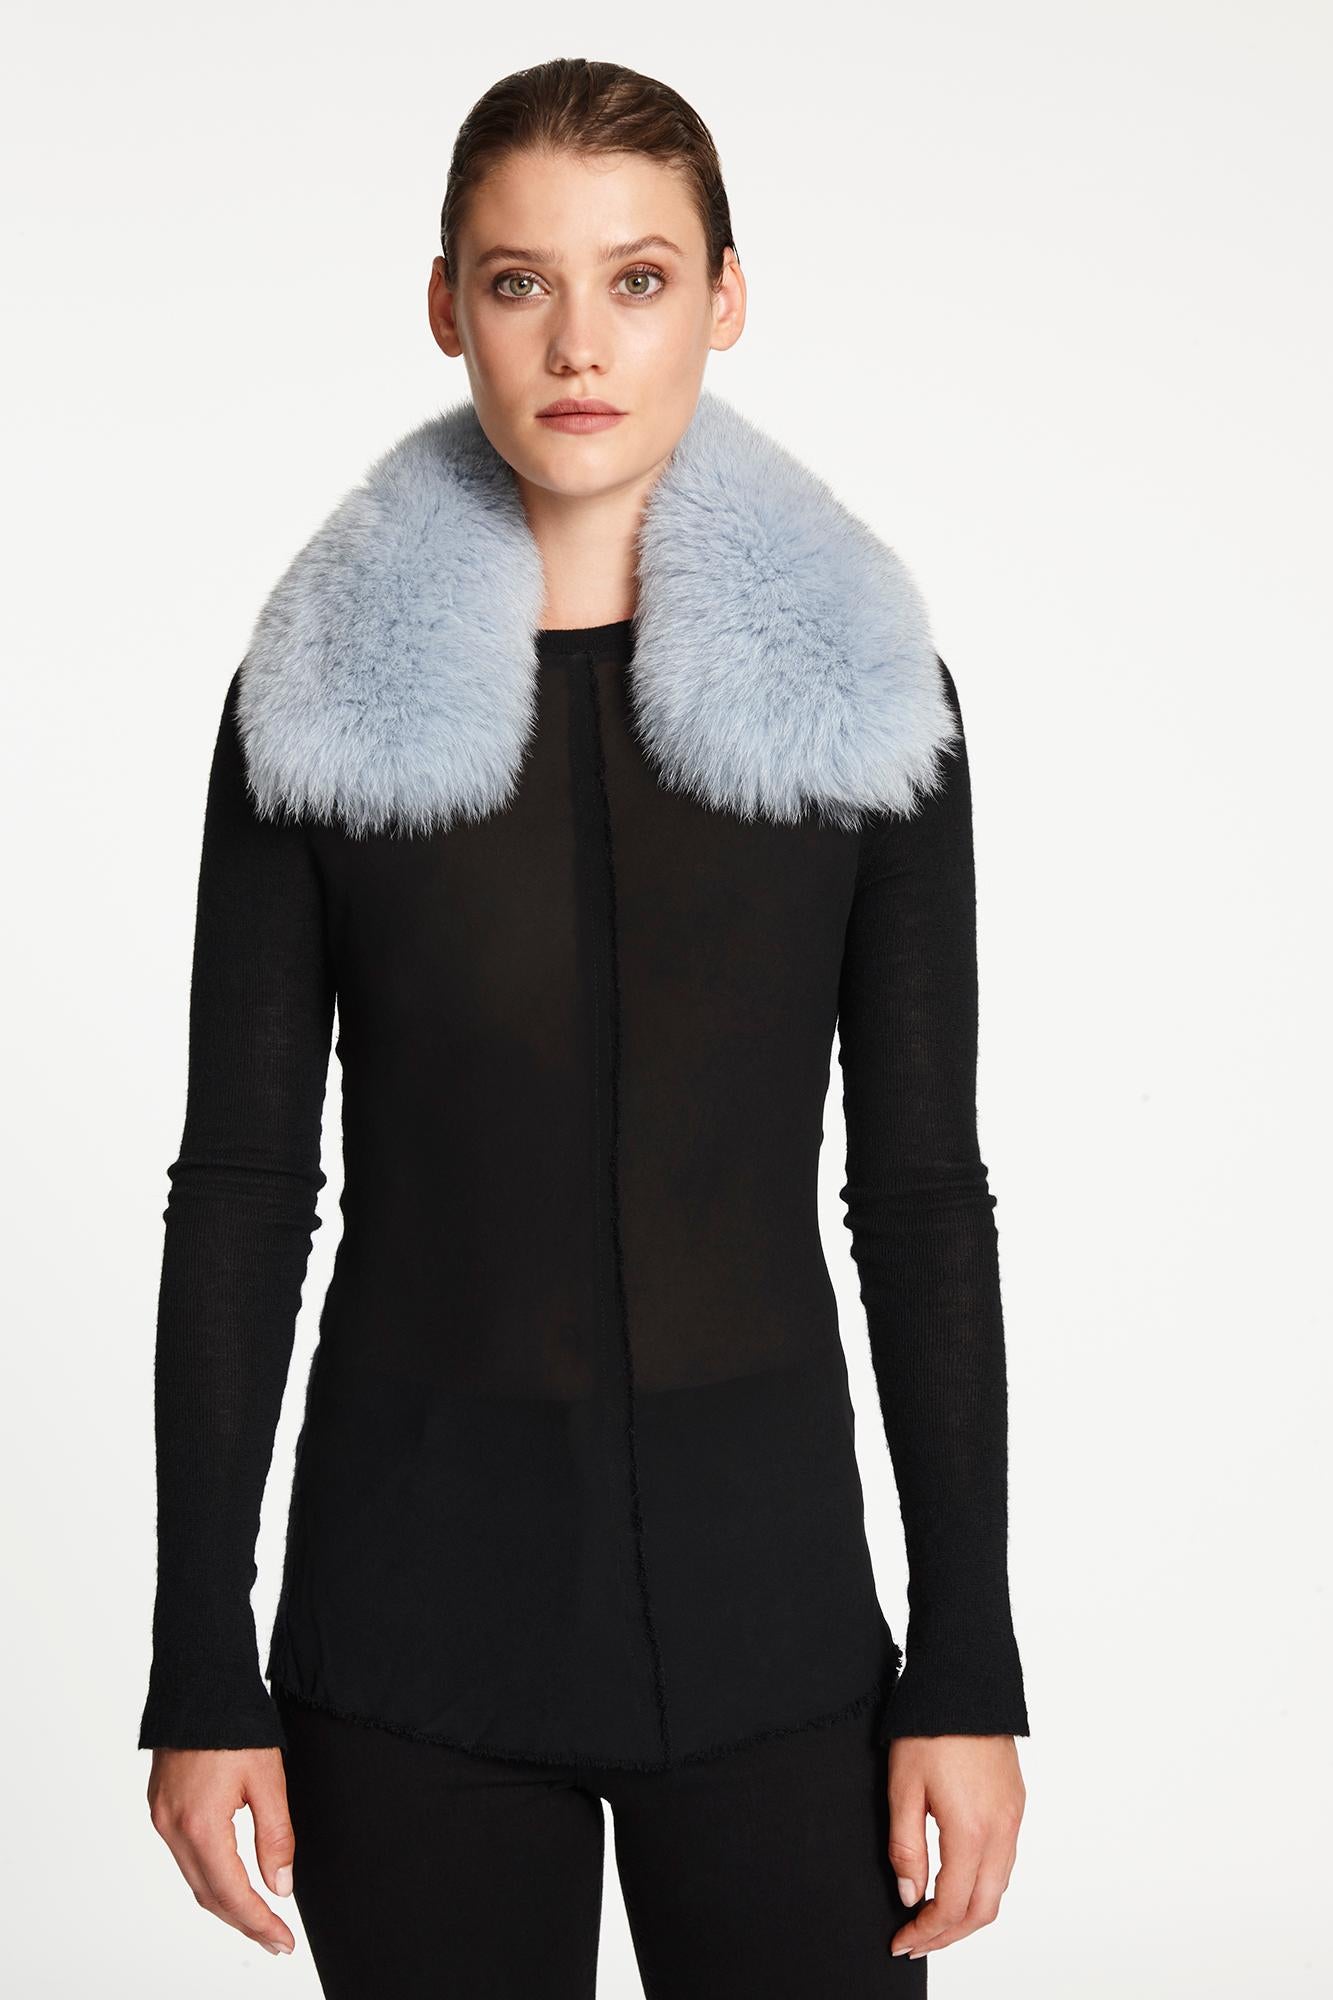 Women's or Men's Verheyen London Peter Pan Collar in Iced Blue Fox Fur - Brand new 